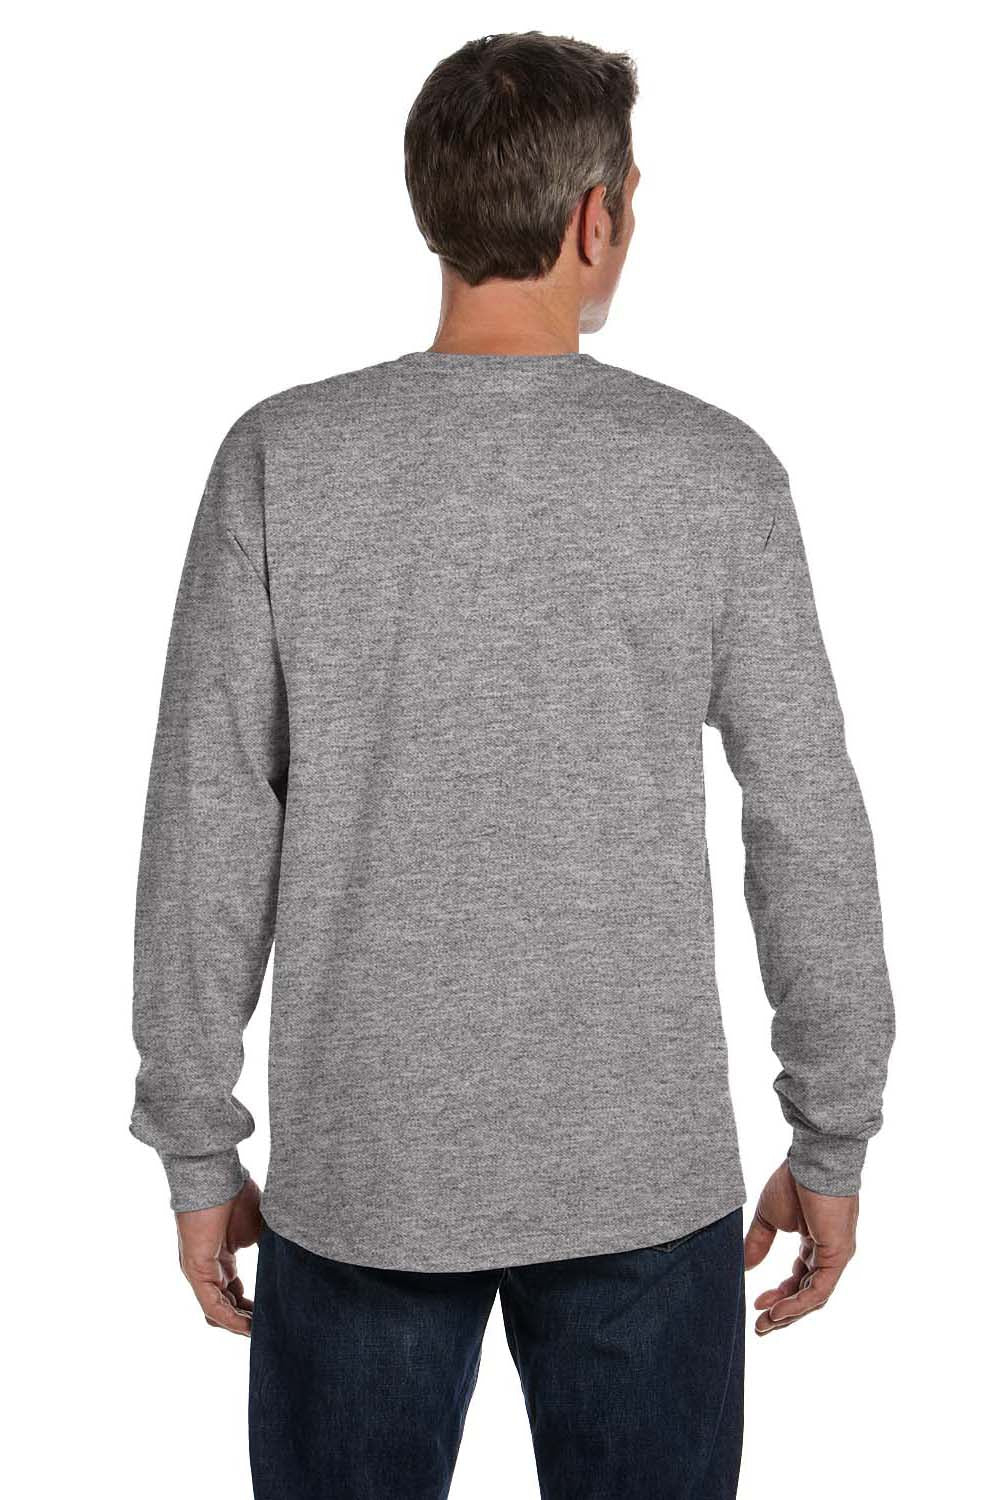 Hanes 5596 Mens ComfortSoft Long Sleeve Crewneck T-Shirt w/ Pocket Light Steel Grey Back